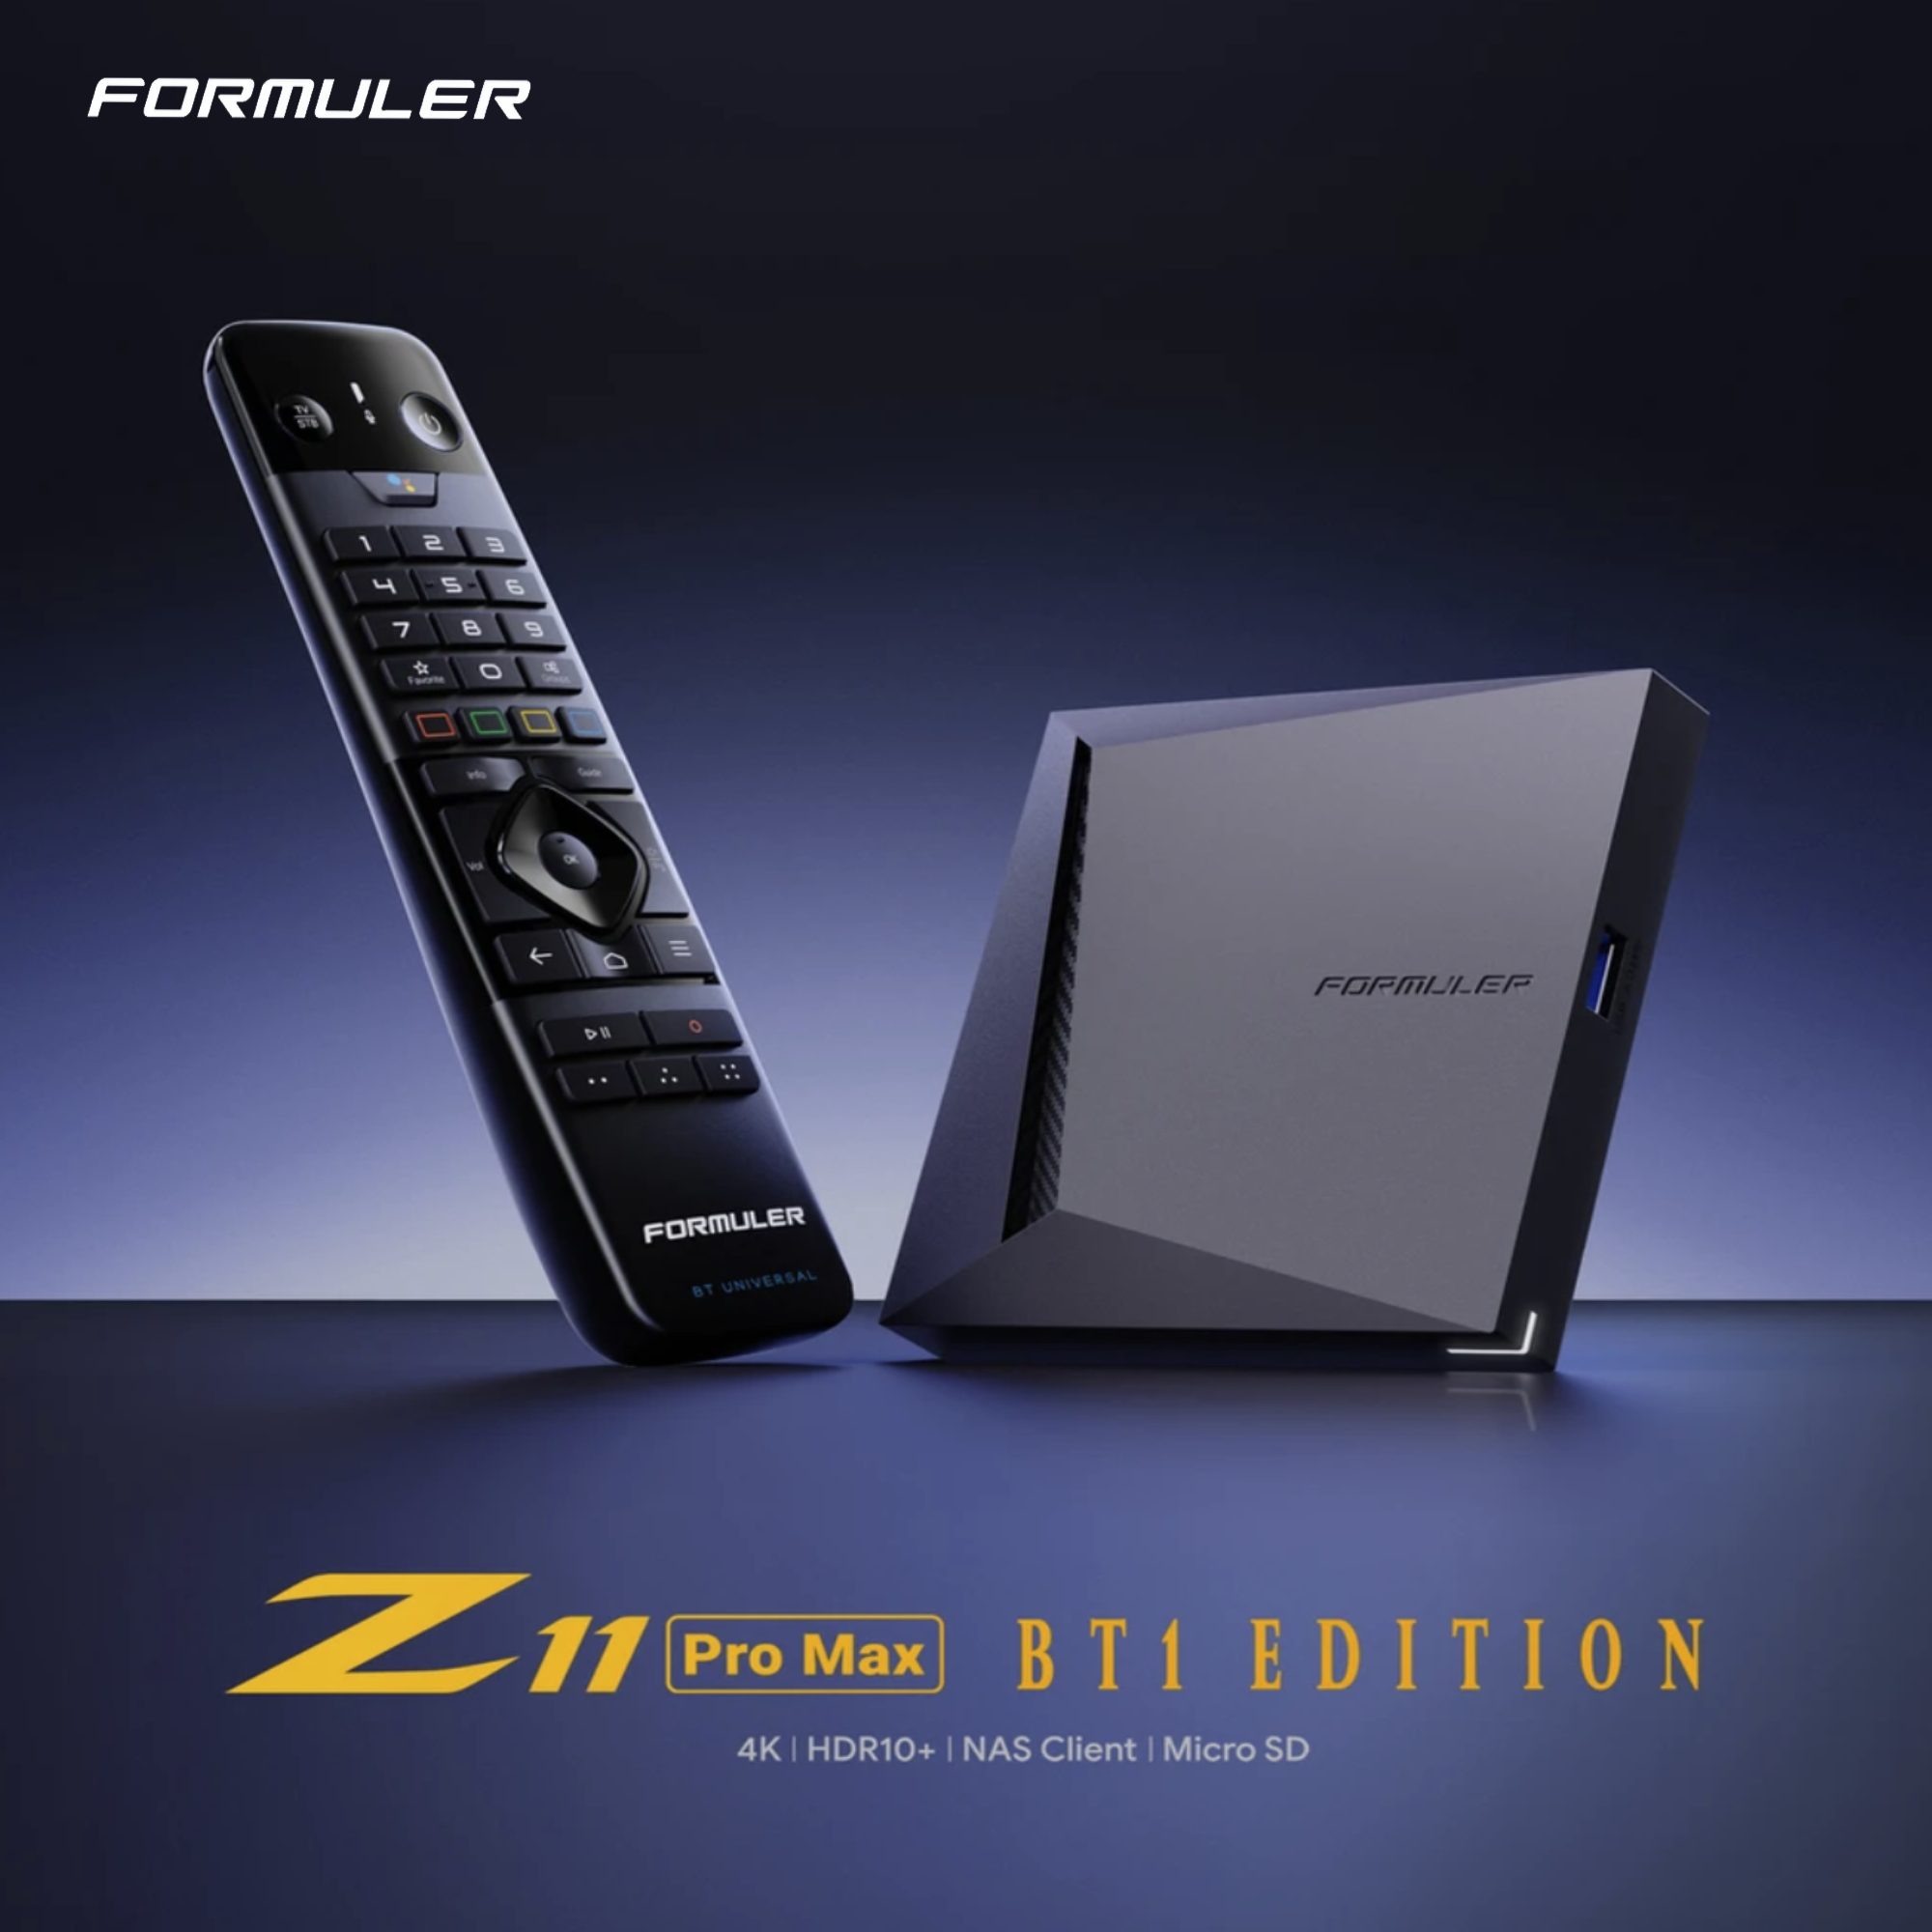 FORMULER Z11 GB Edition 32 Max Pro BT1